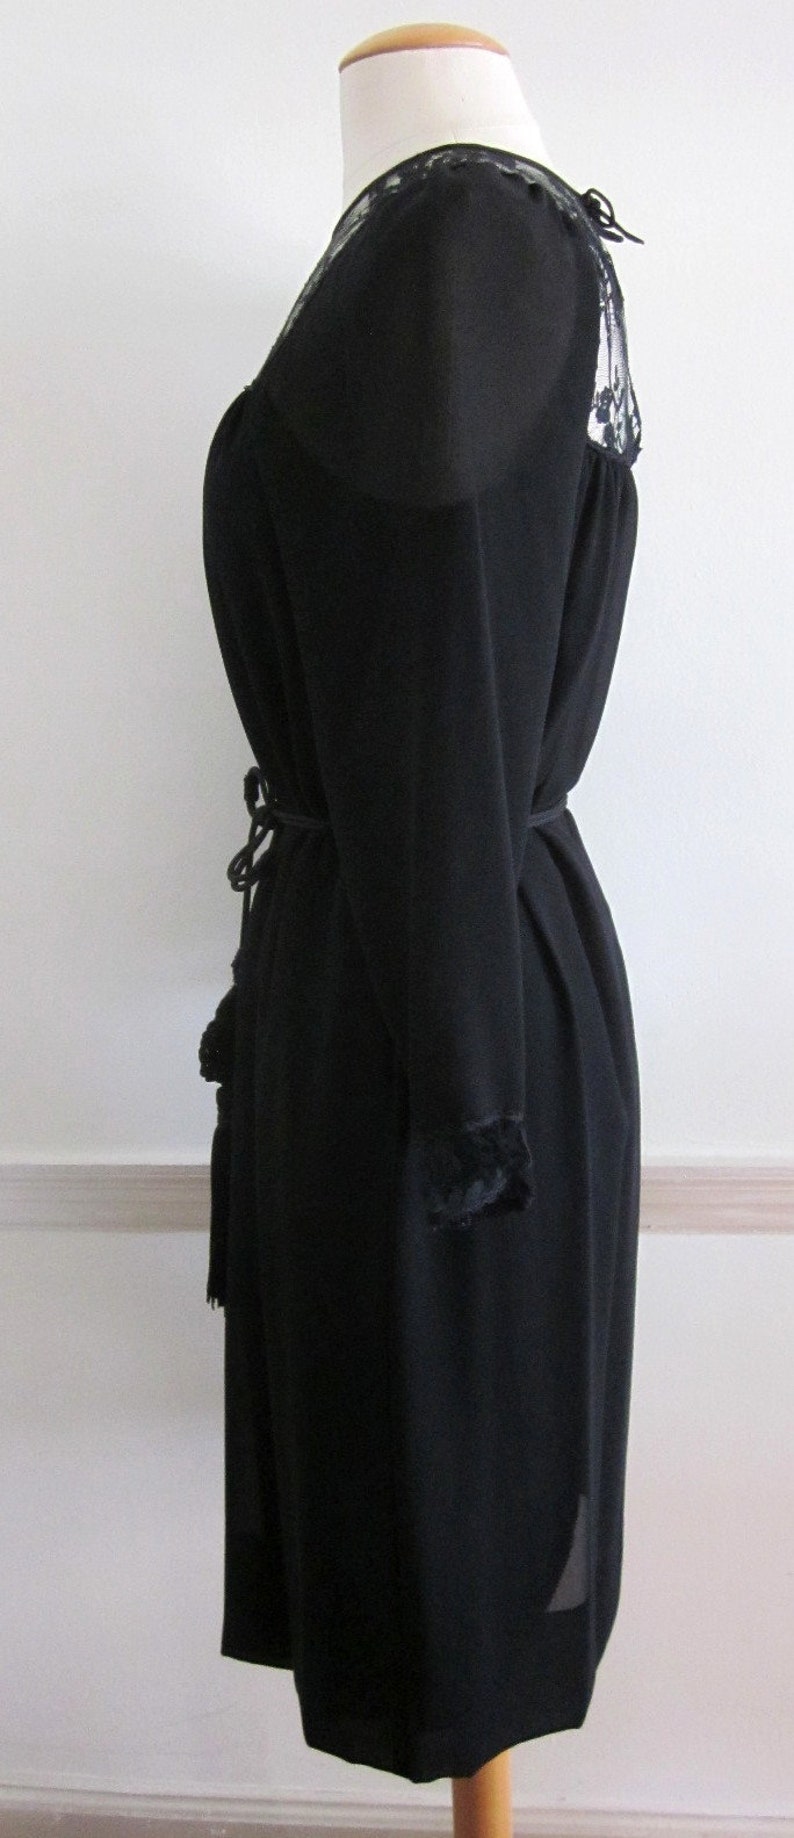 Hanae Mori Dress / Vintage Hanae Mori Dress / Black Lace Hanae Mori Dress / Lace LBD / fits S / 70s Hanae Mori Silk and Lace Dress image 6